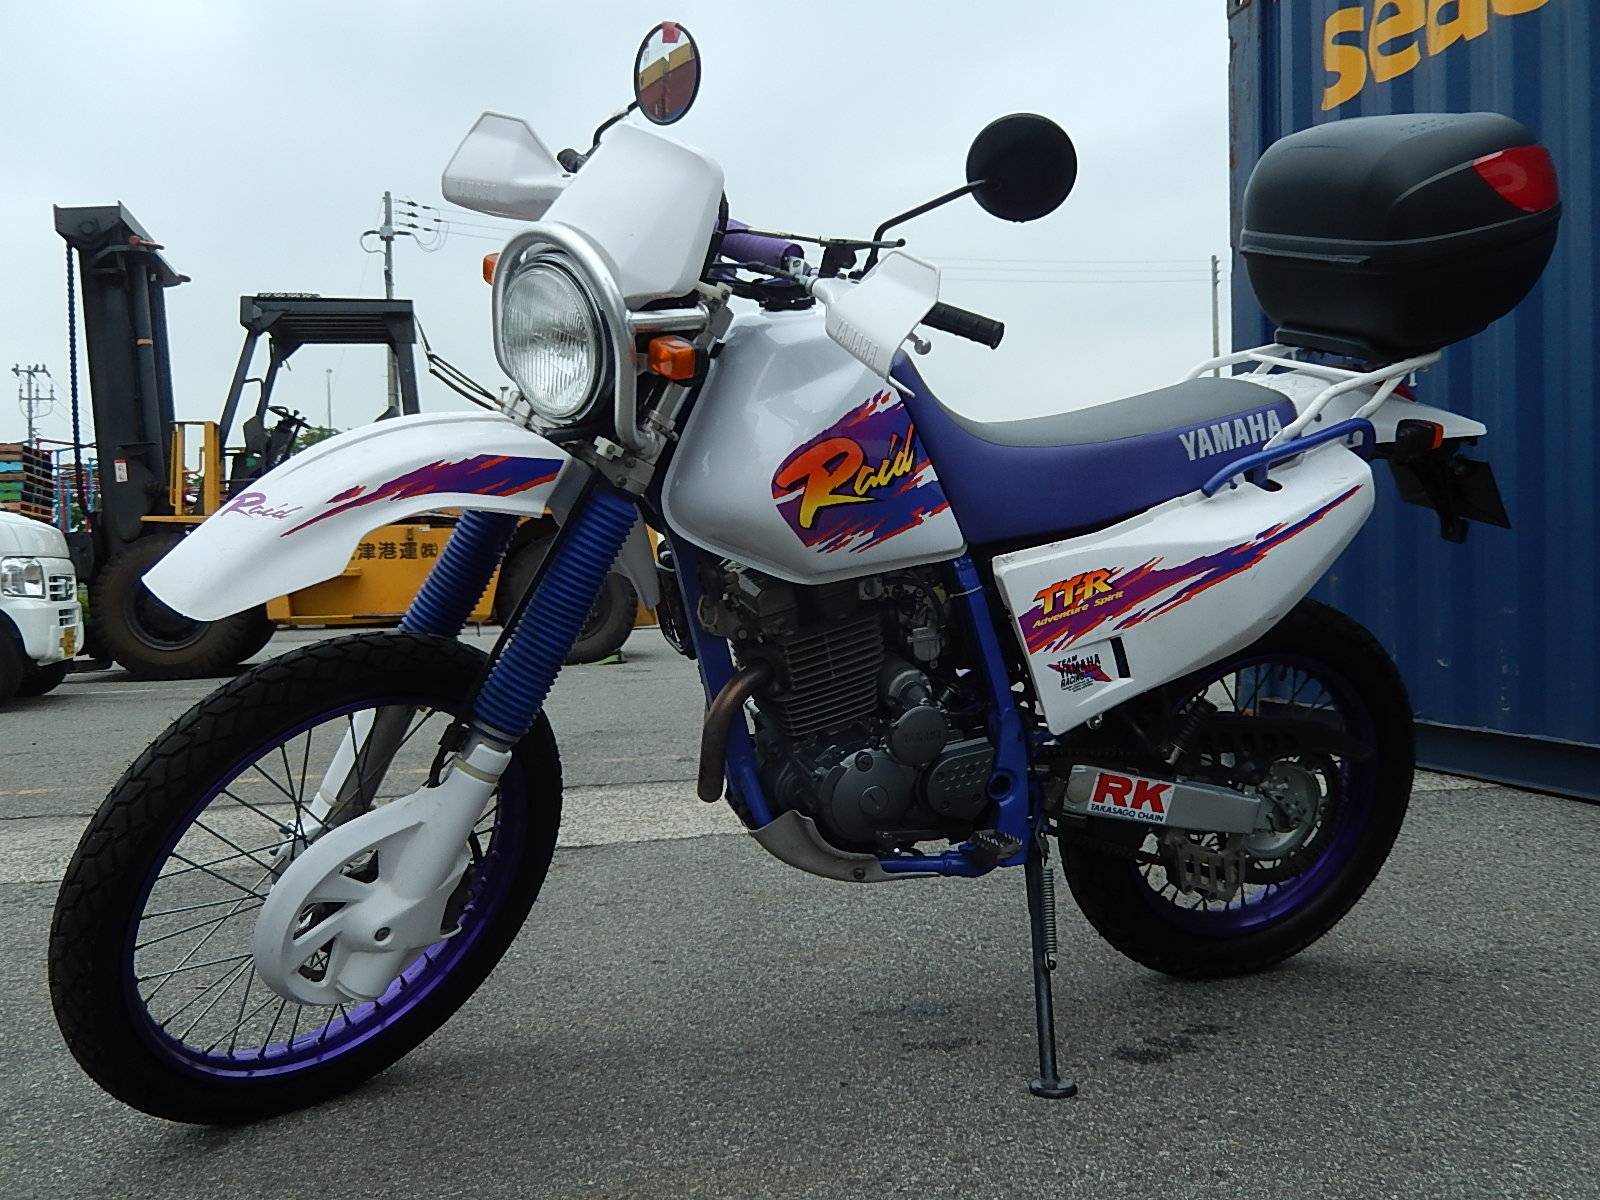 Yamaha tt-r250 open enduro:тест-драйв с honda xr250 и kawasaki klx250